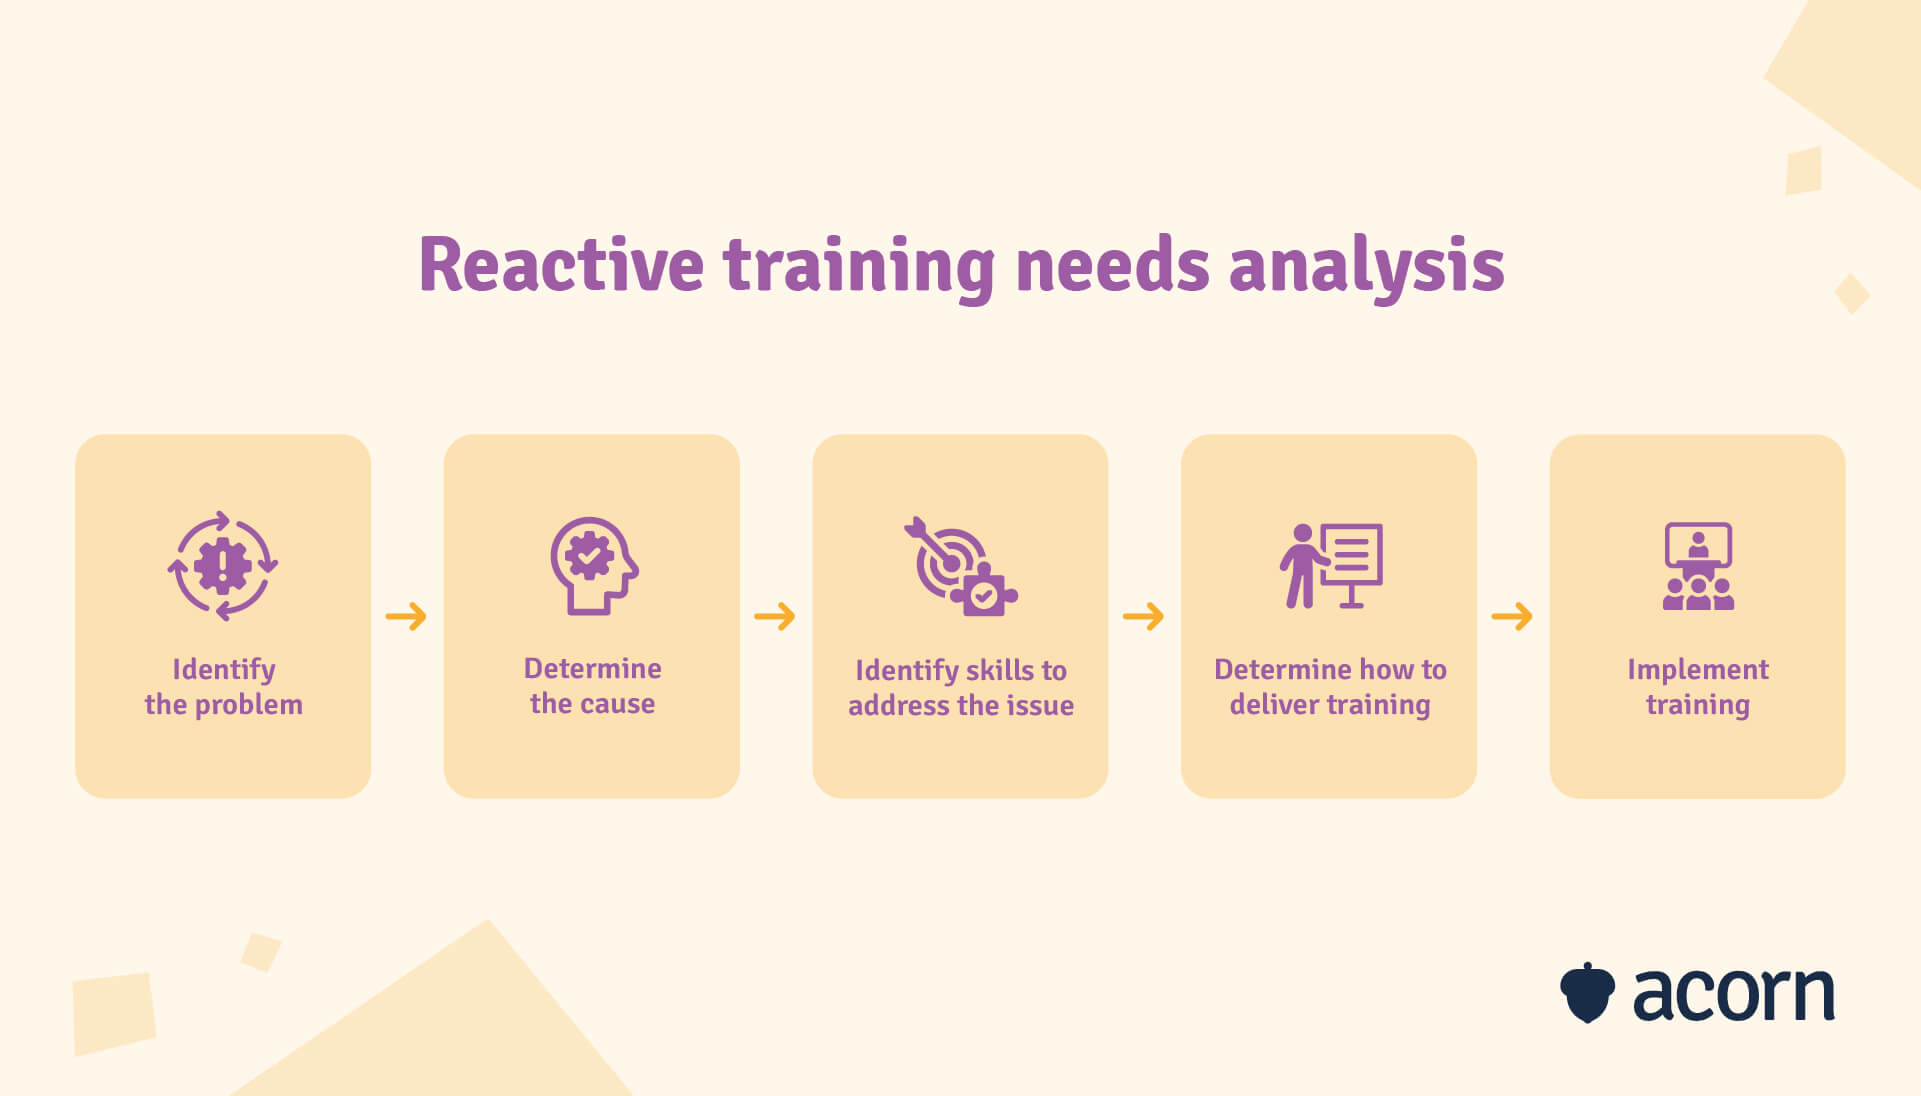 reactive training needs analysis steps